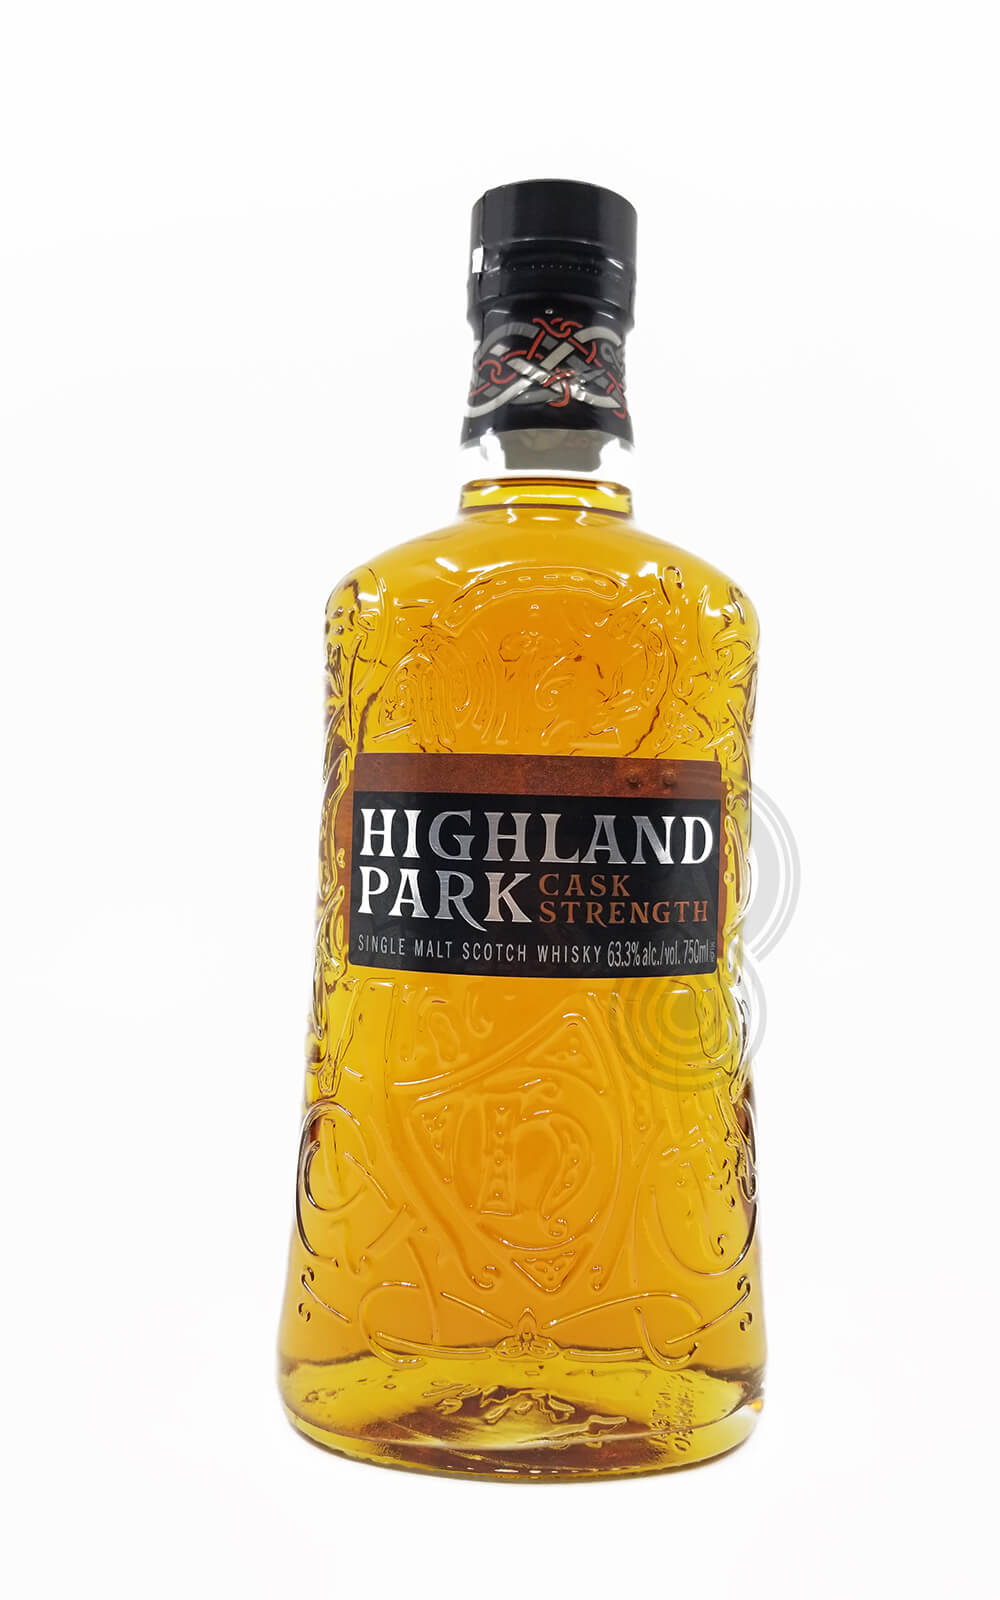 Highland Park Cask Strength Release #2